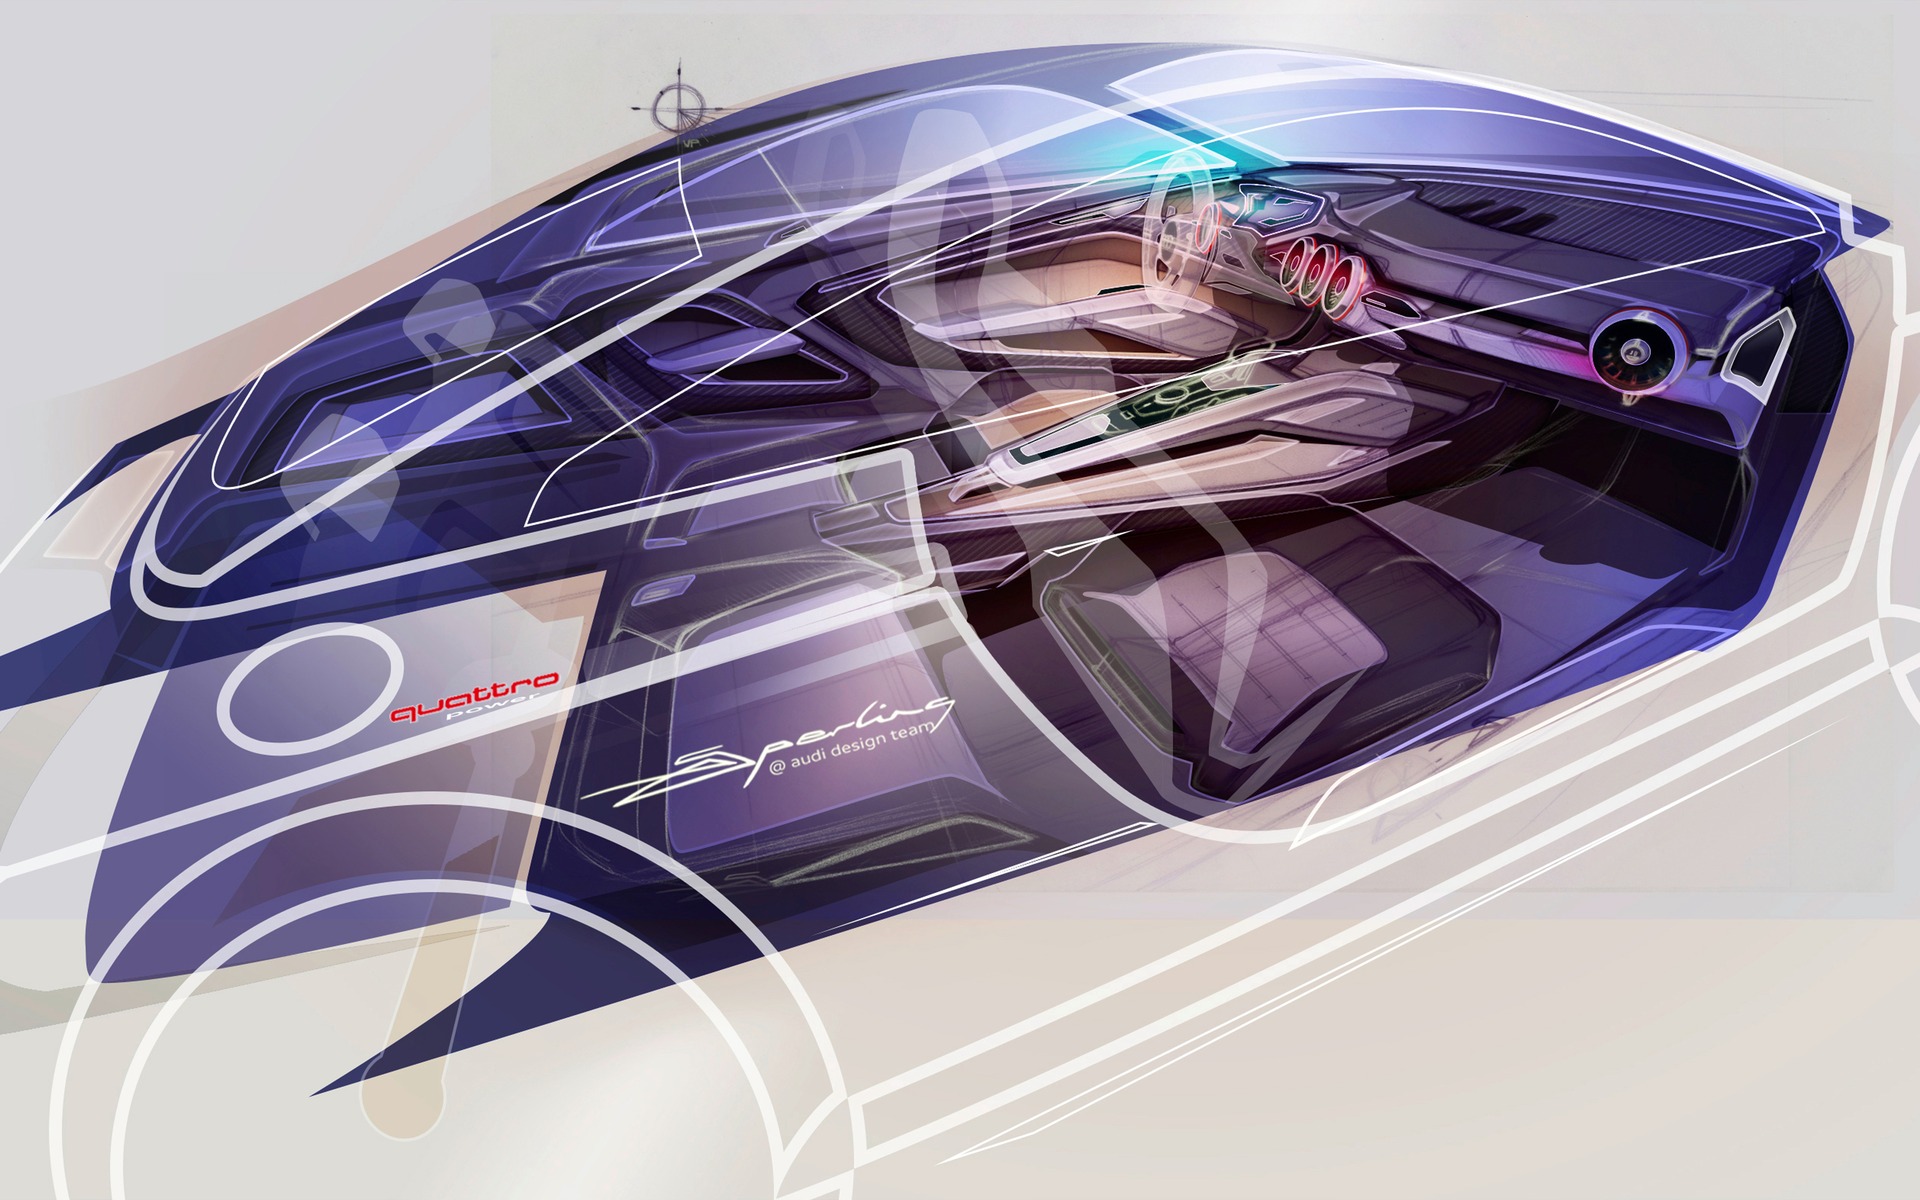 Audi Virtual Cockpit - Early design sketch.